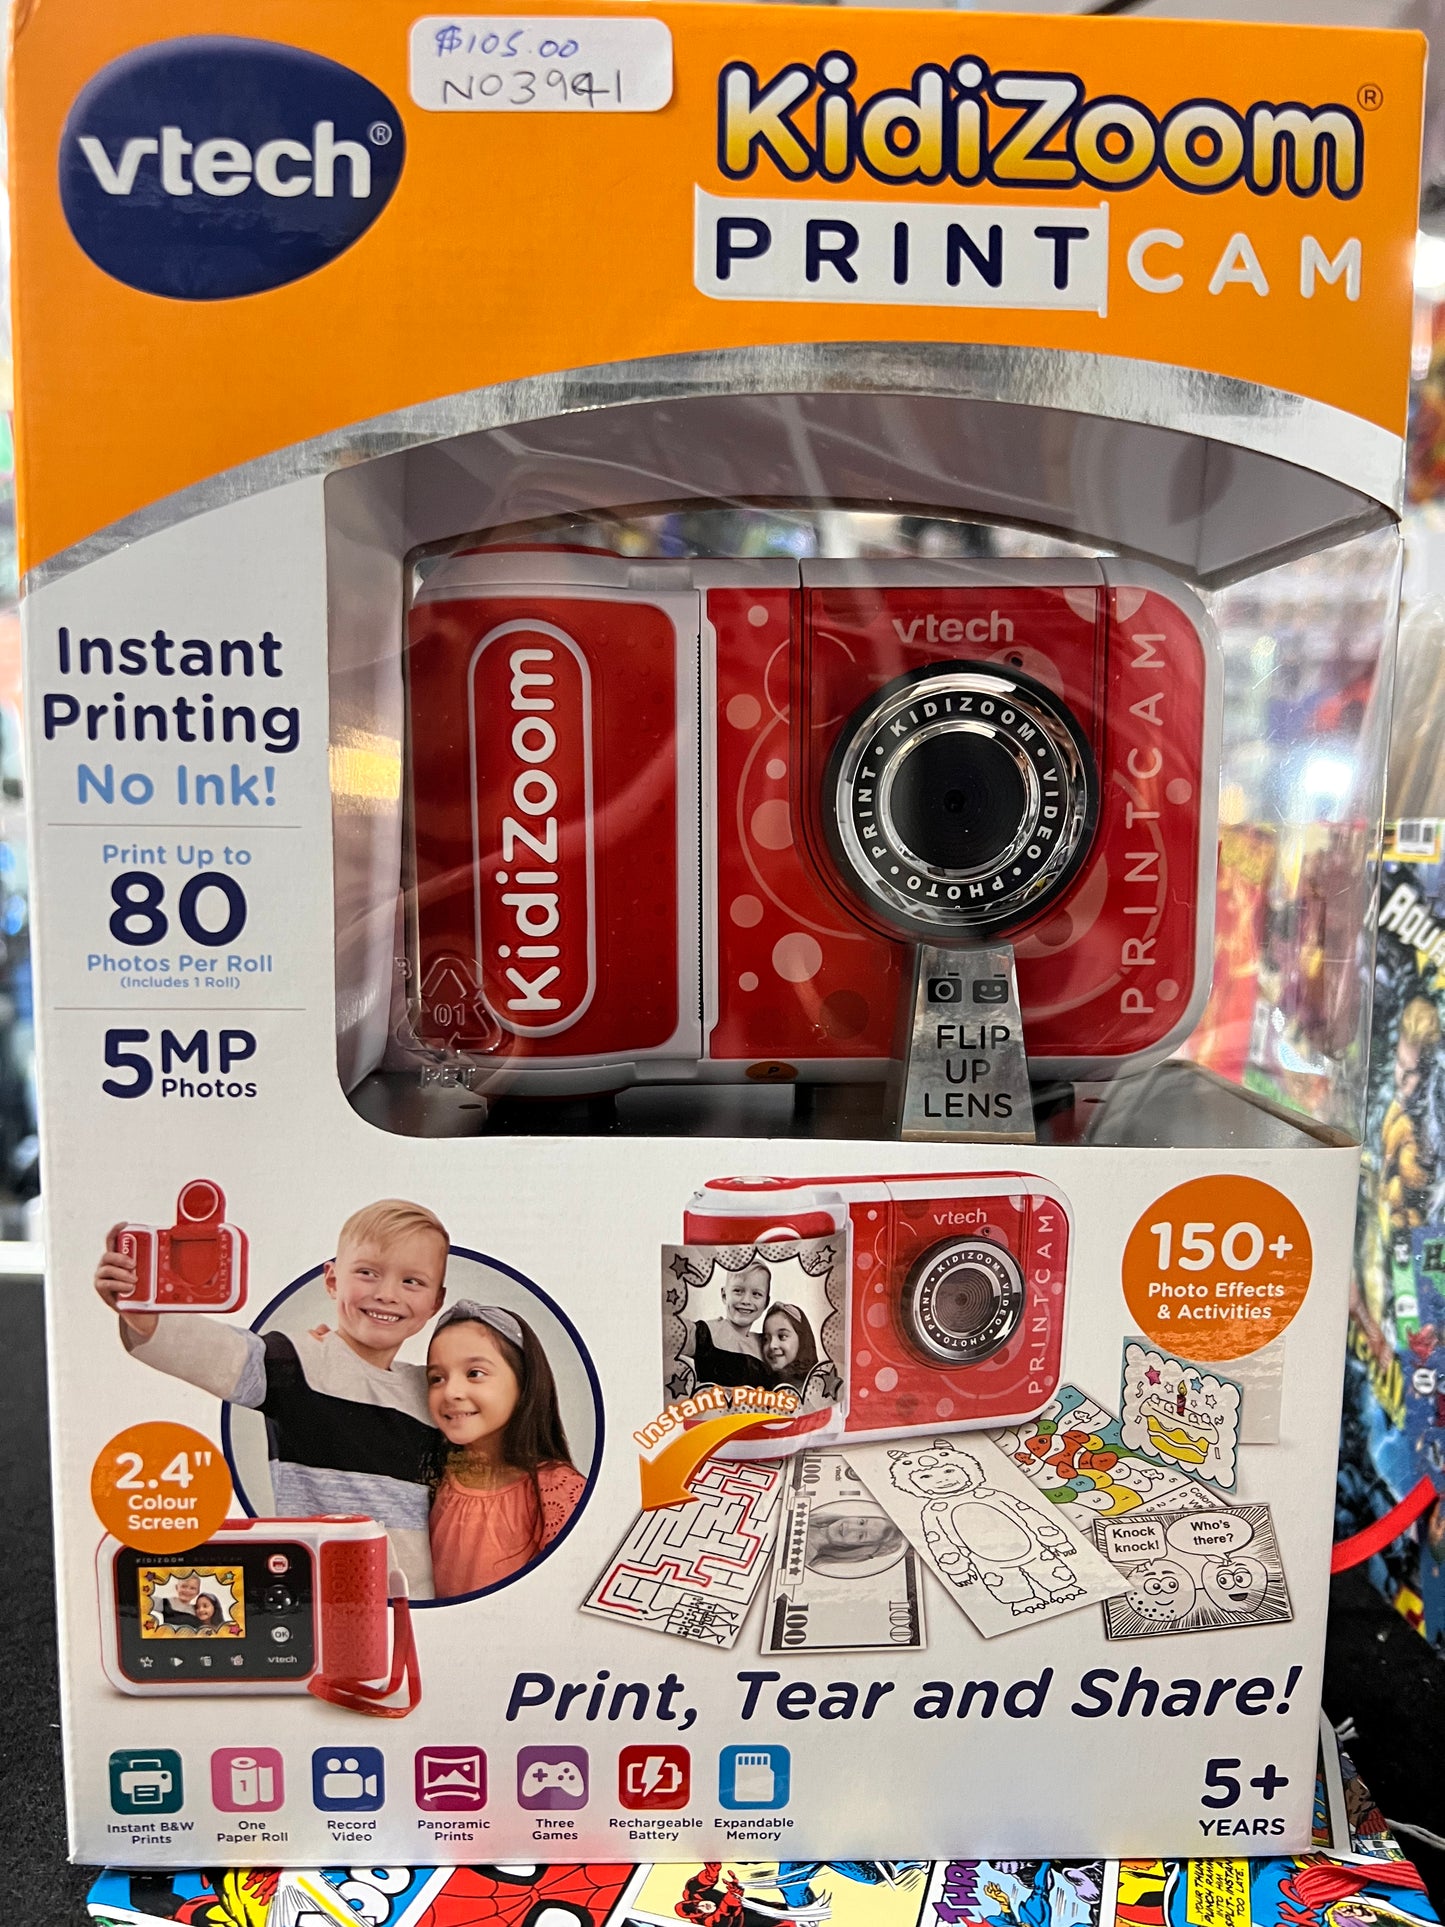 VTech KidiZoom PrintCam - Digital Camera for Children with Built-in Printer